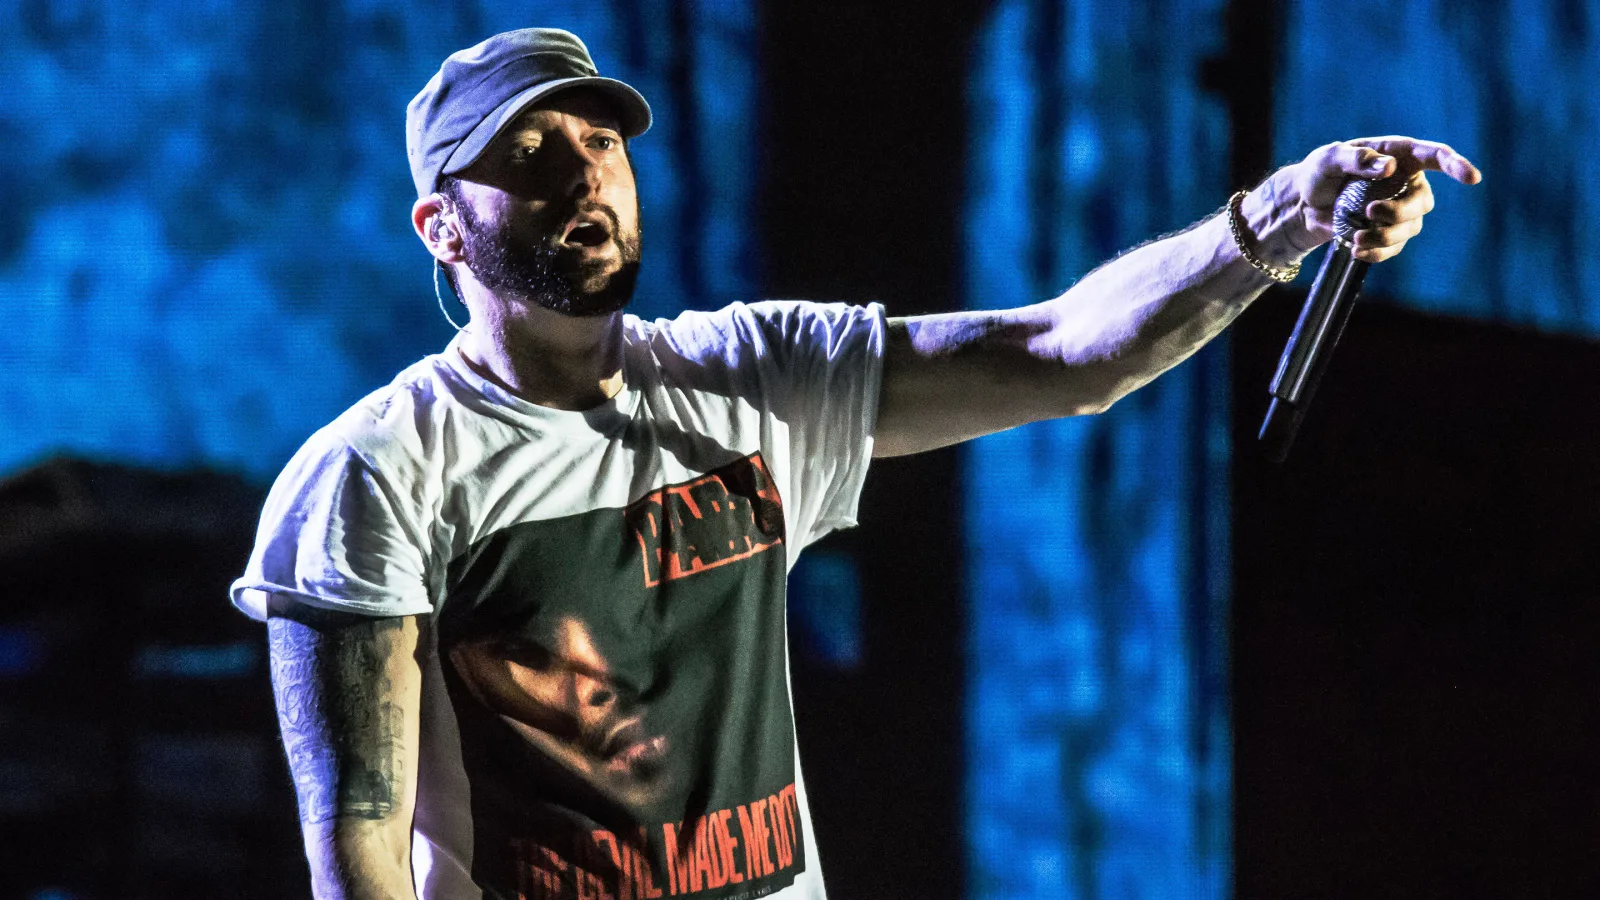 Eminem: Kamikaze Album Review